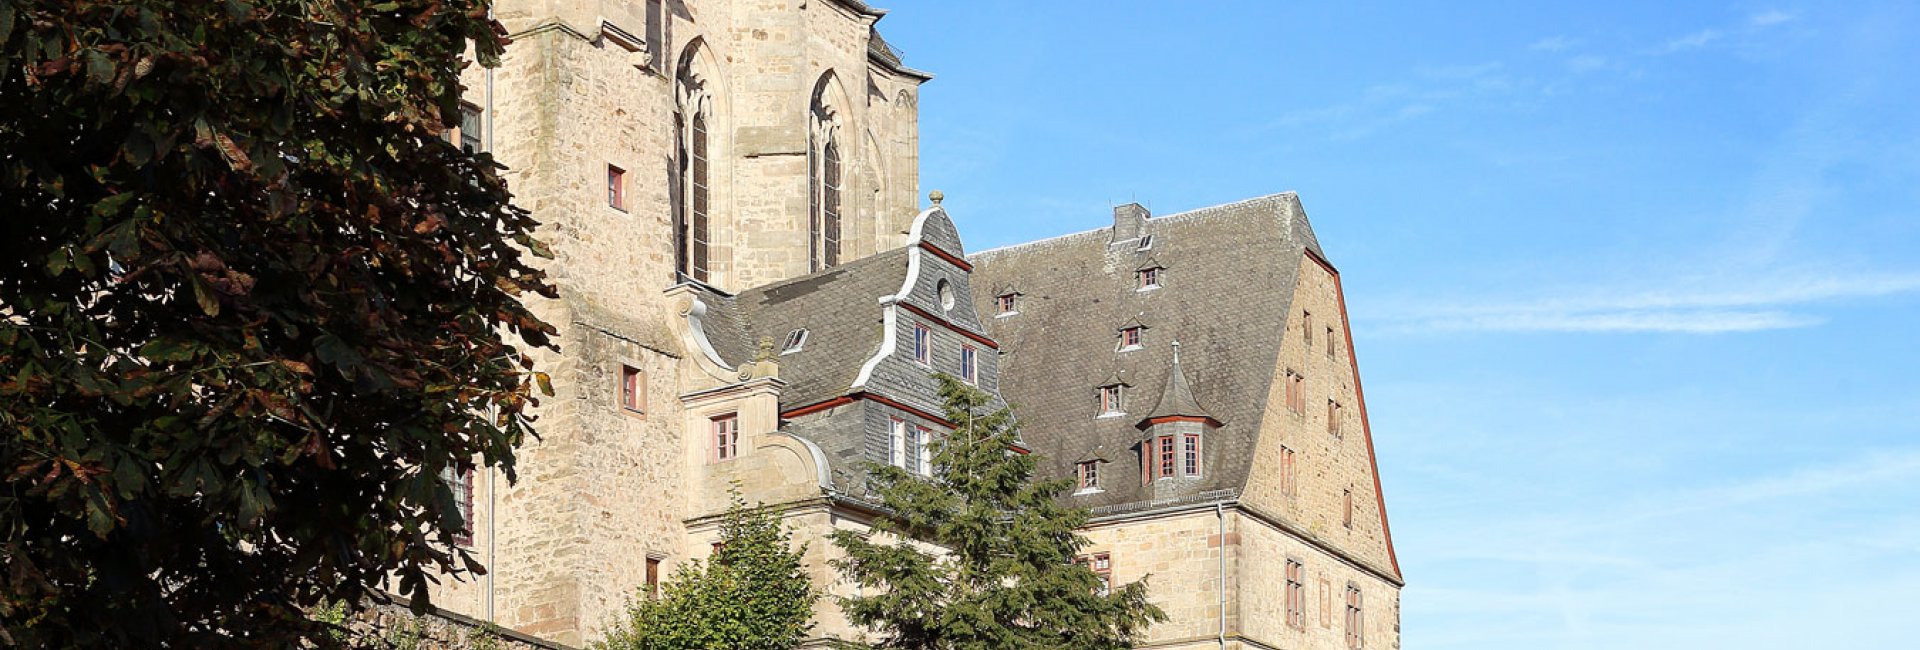 Marburg Castle concerts